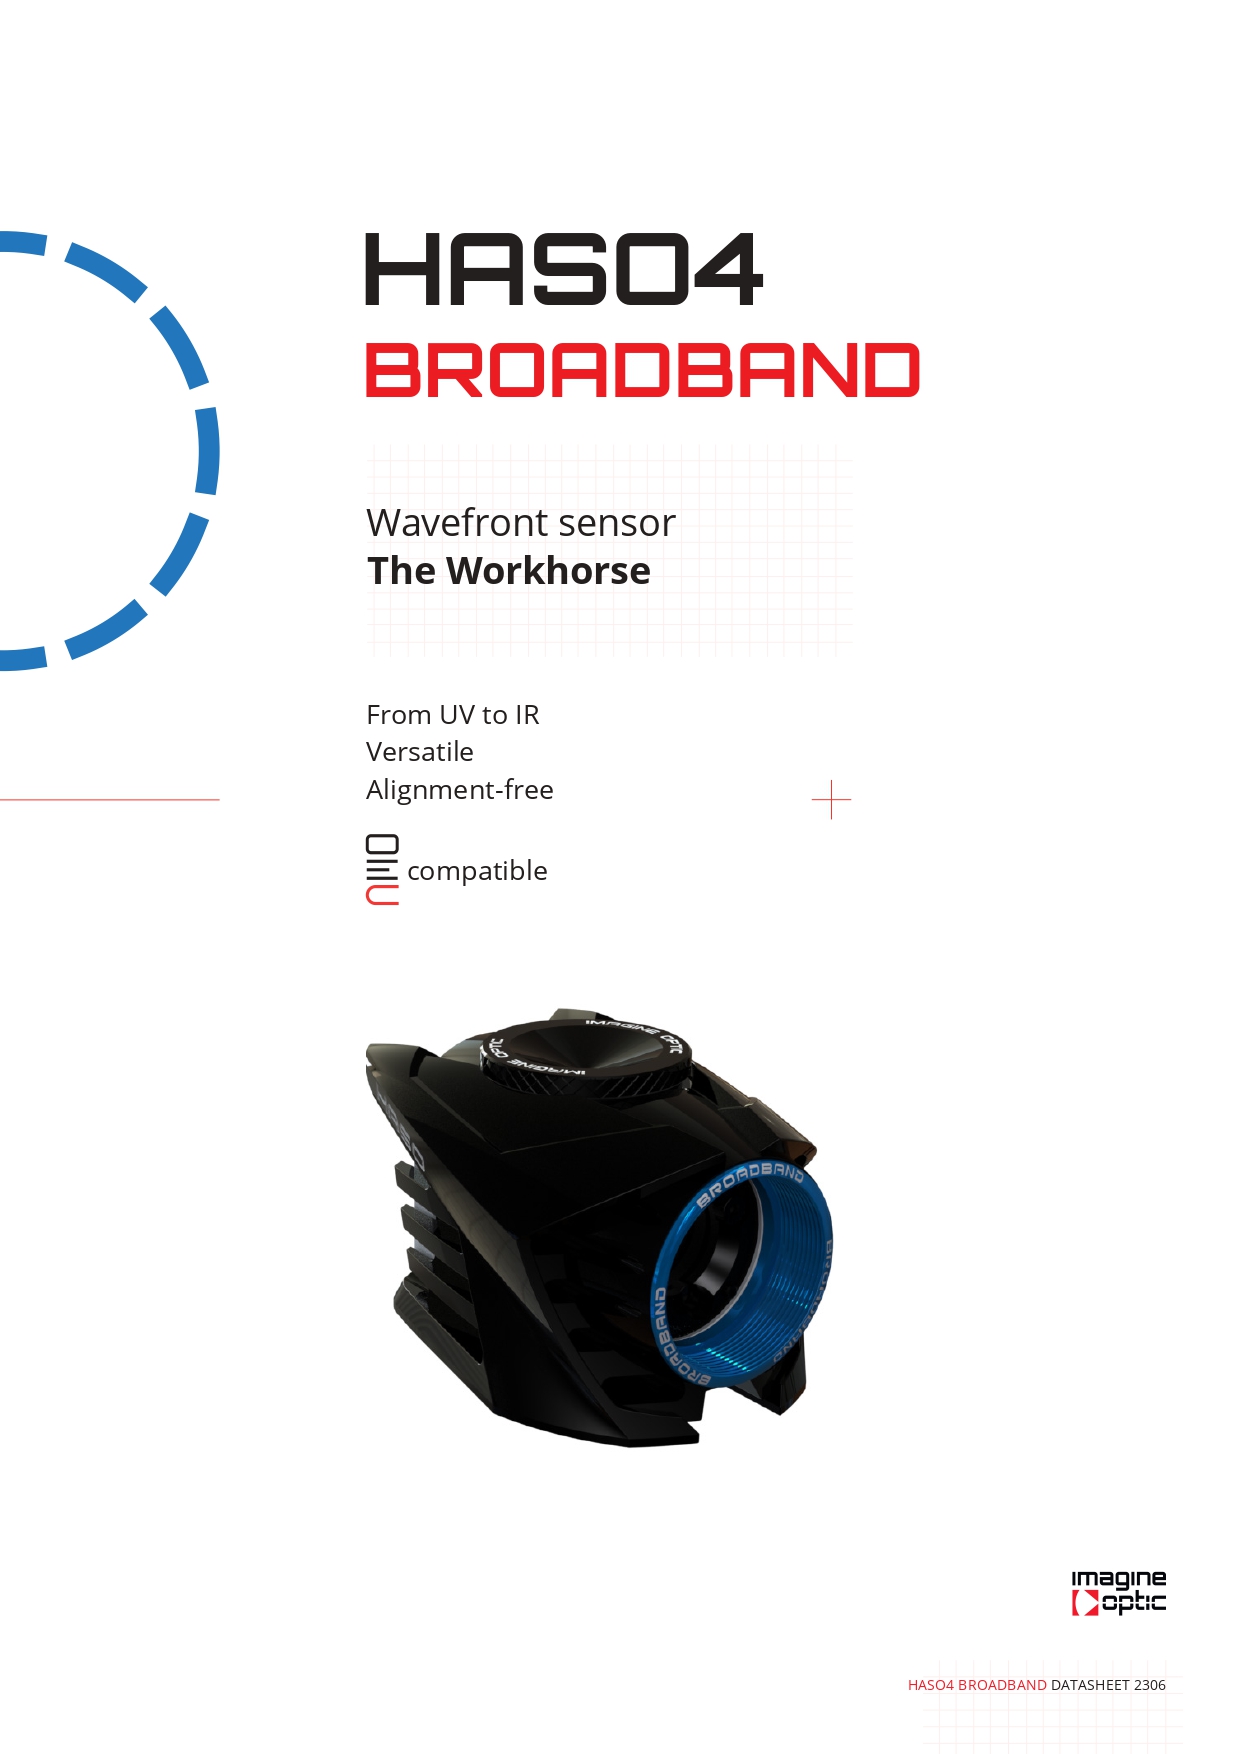 HASO4-Broadband-datasheet-Cover